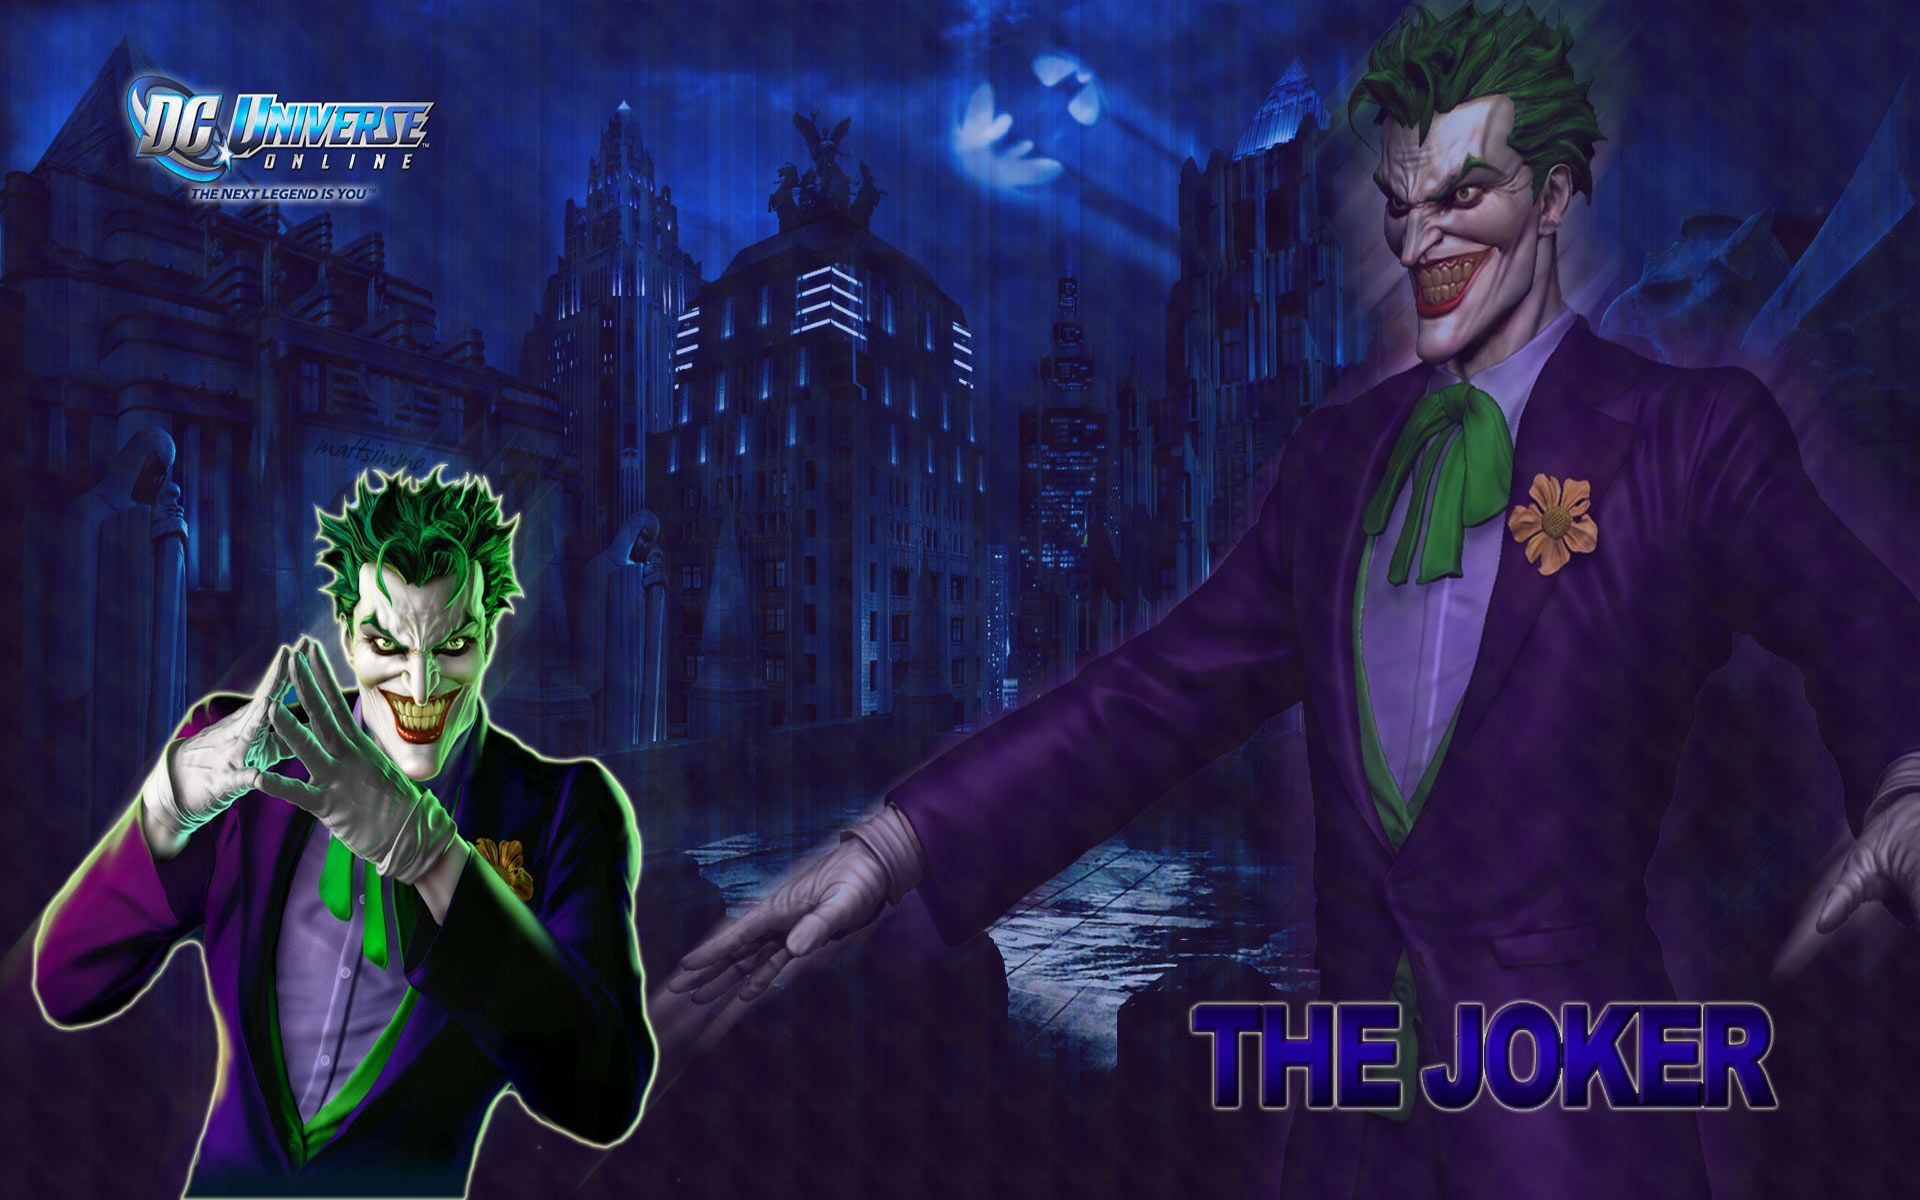 Free download Games Wallpaper Joker DC Universe Online wallpaper [1920x1200] for your Desktop, Mobile & Tablet. Explore Dc Universe Wallpaper. Dc Logo Wallpaper, Free DC Comics Wallpaper, DC Comics HD Wallpaper